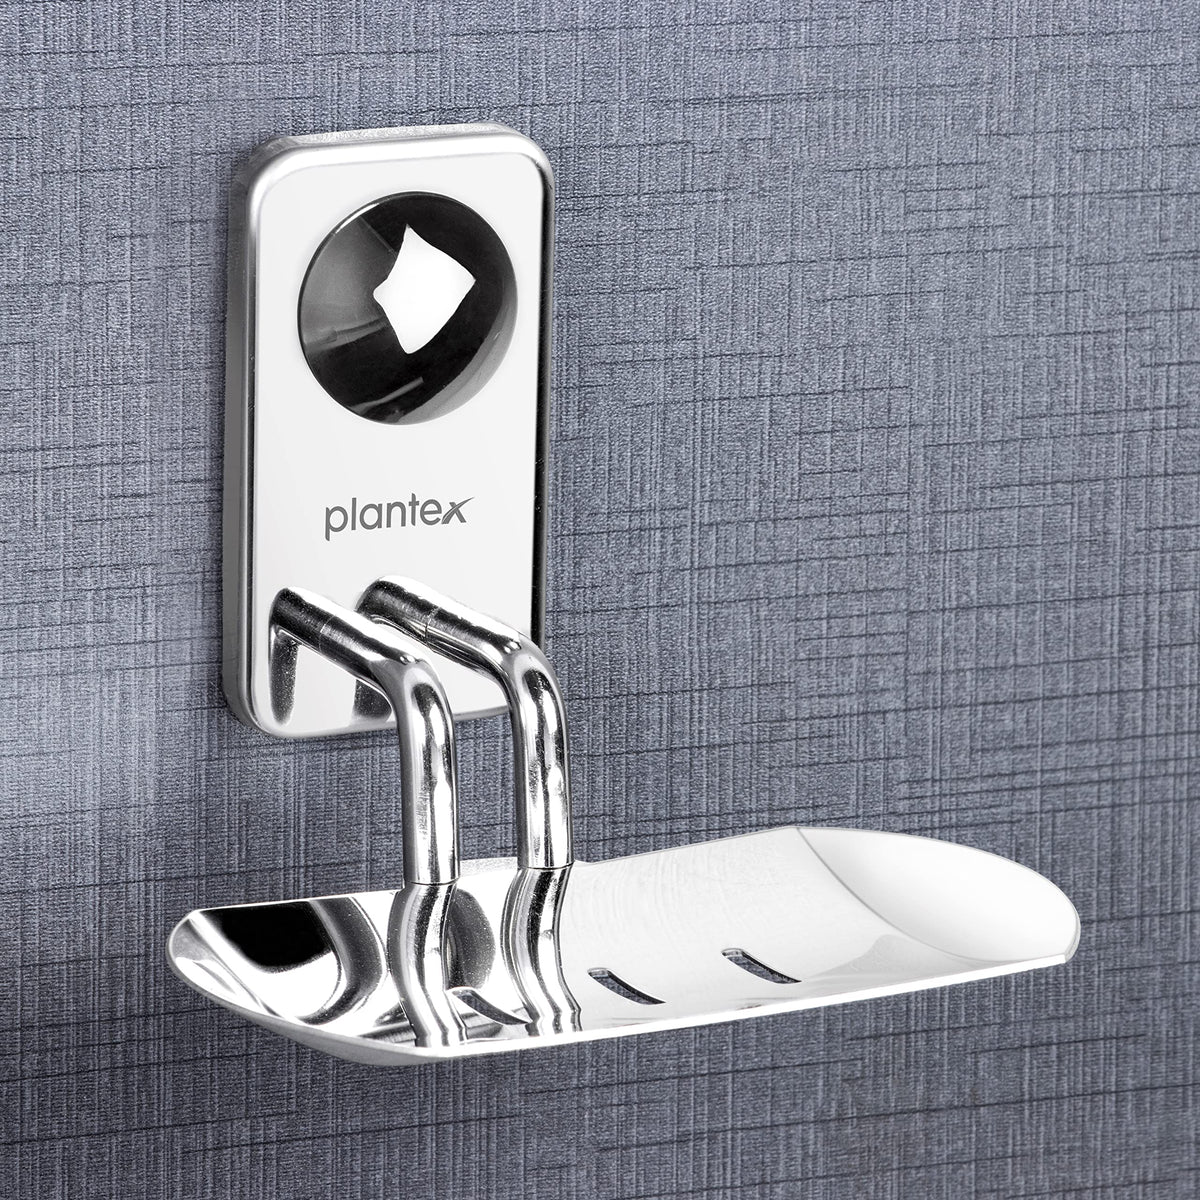 Plantex Metro Platinum Stainless Steel Soap Dish - Soap Stand - Bathroom Soap Holder - Bathroom Accessories